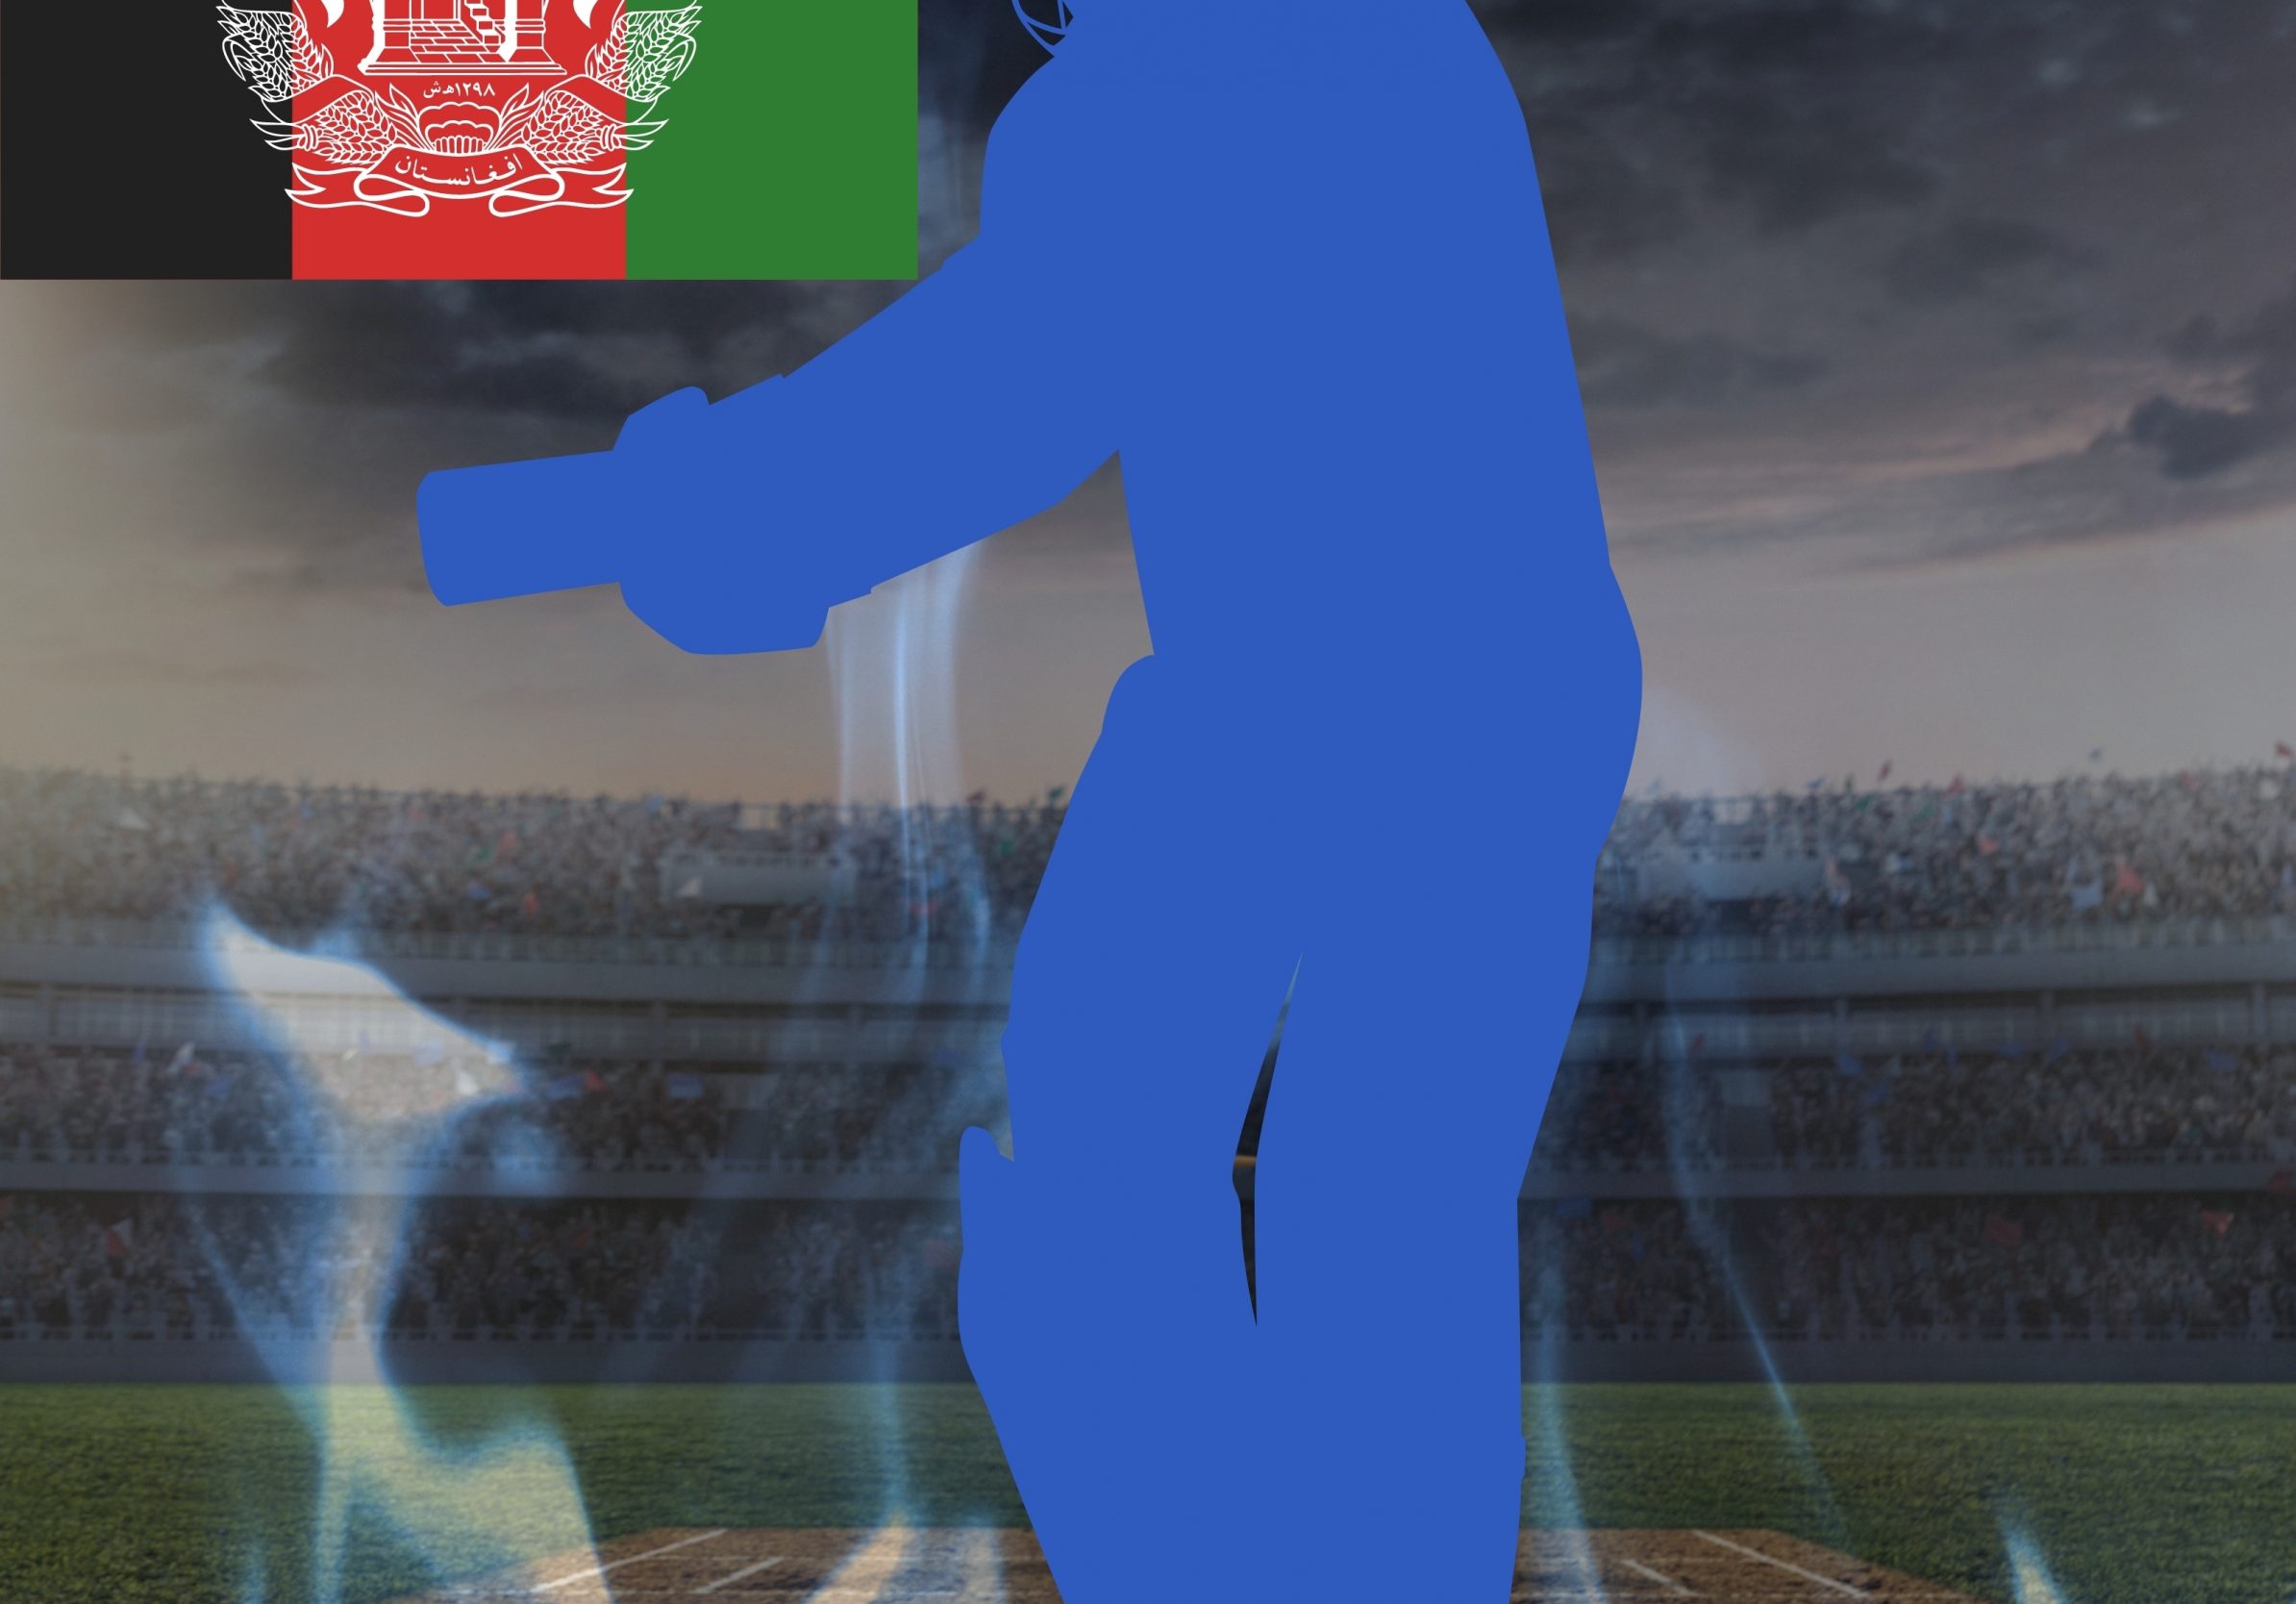 2388x1668 iPad Pro wallpapers Afhganistan Cricket Stadium iPad Wallpaper 2388x1668 pixels resolution